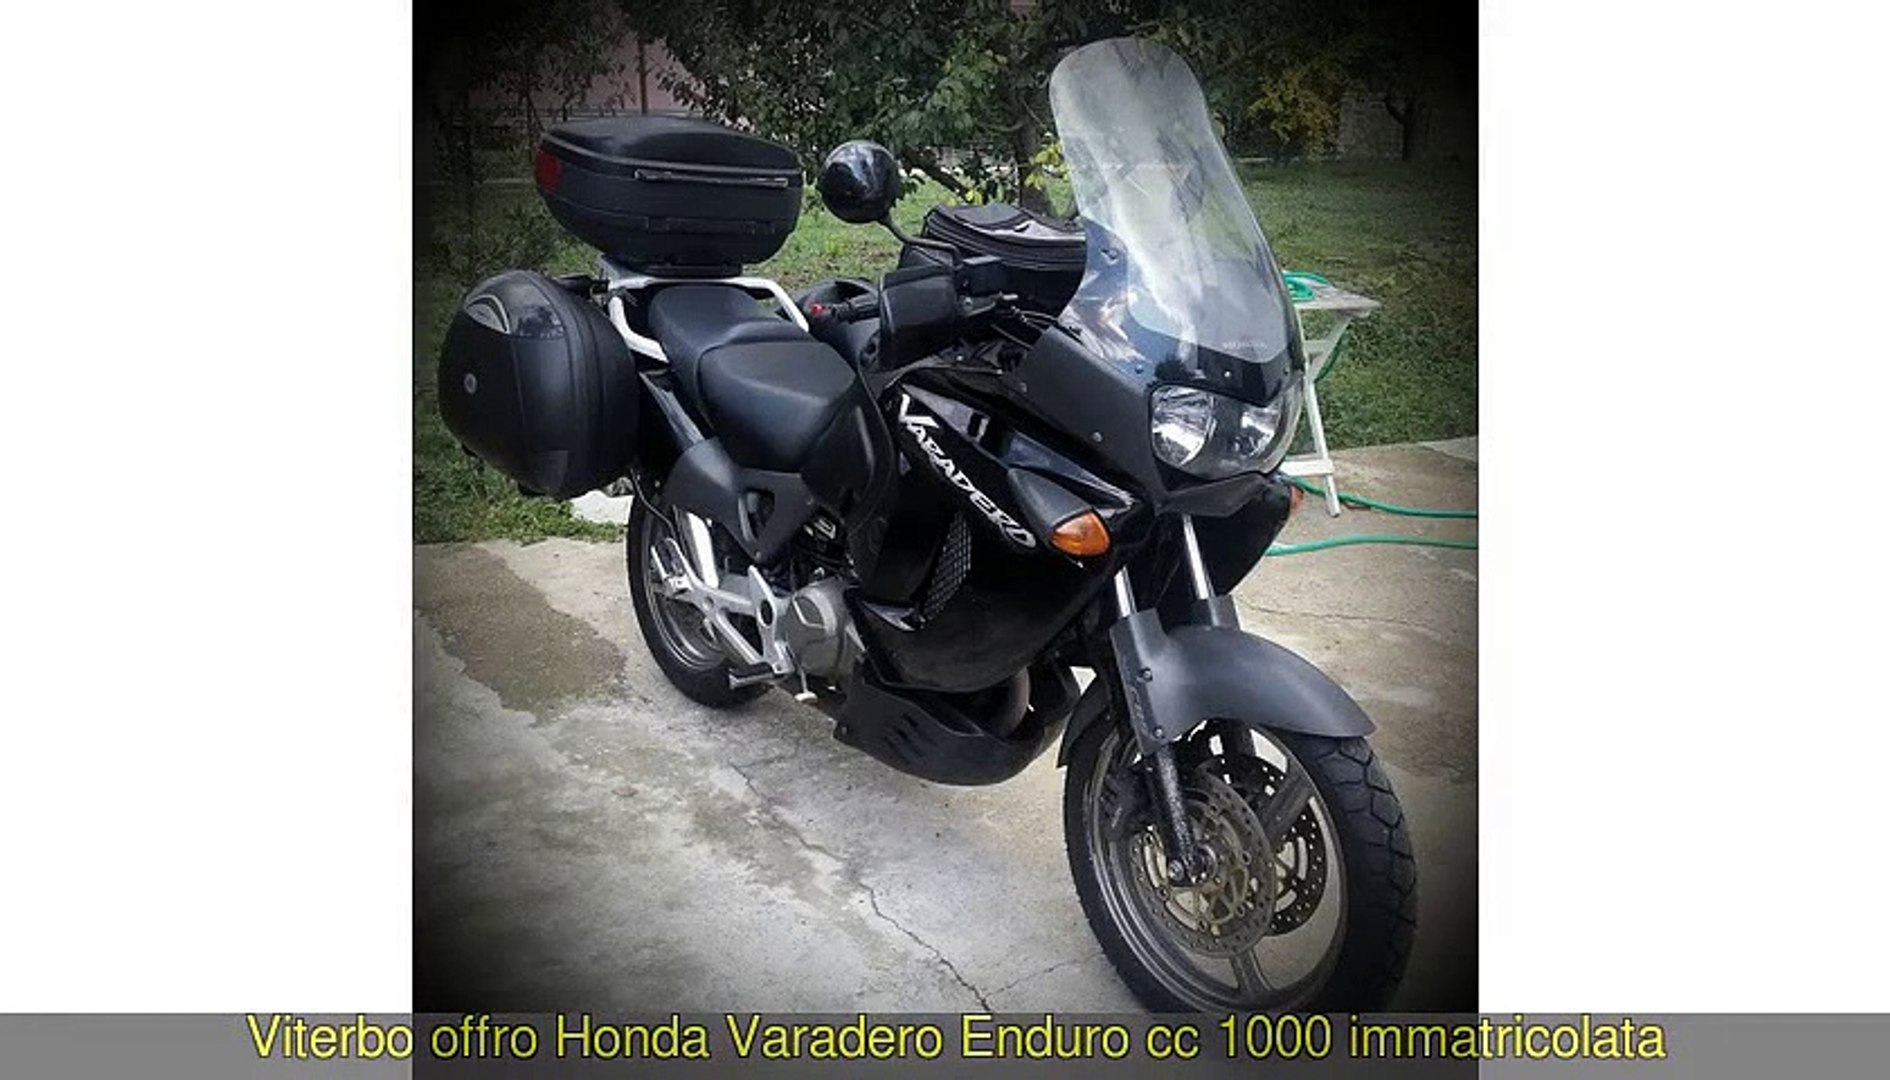 HONDA Varadero Enduro cc 1000 - Video Dailymotion